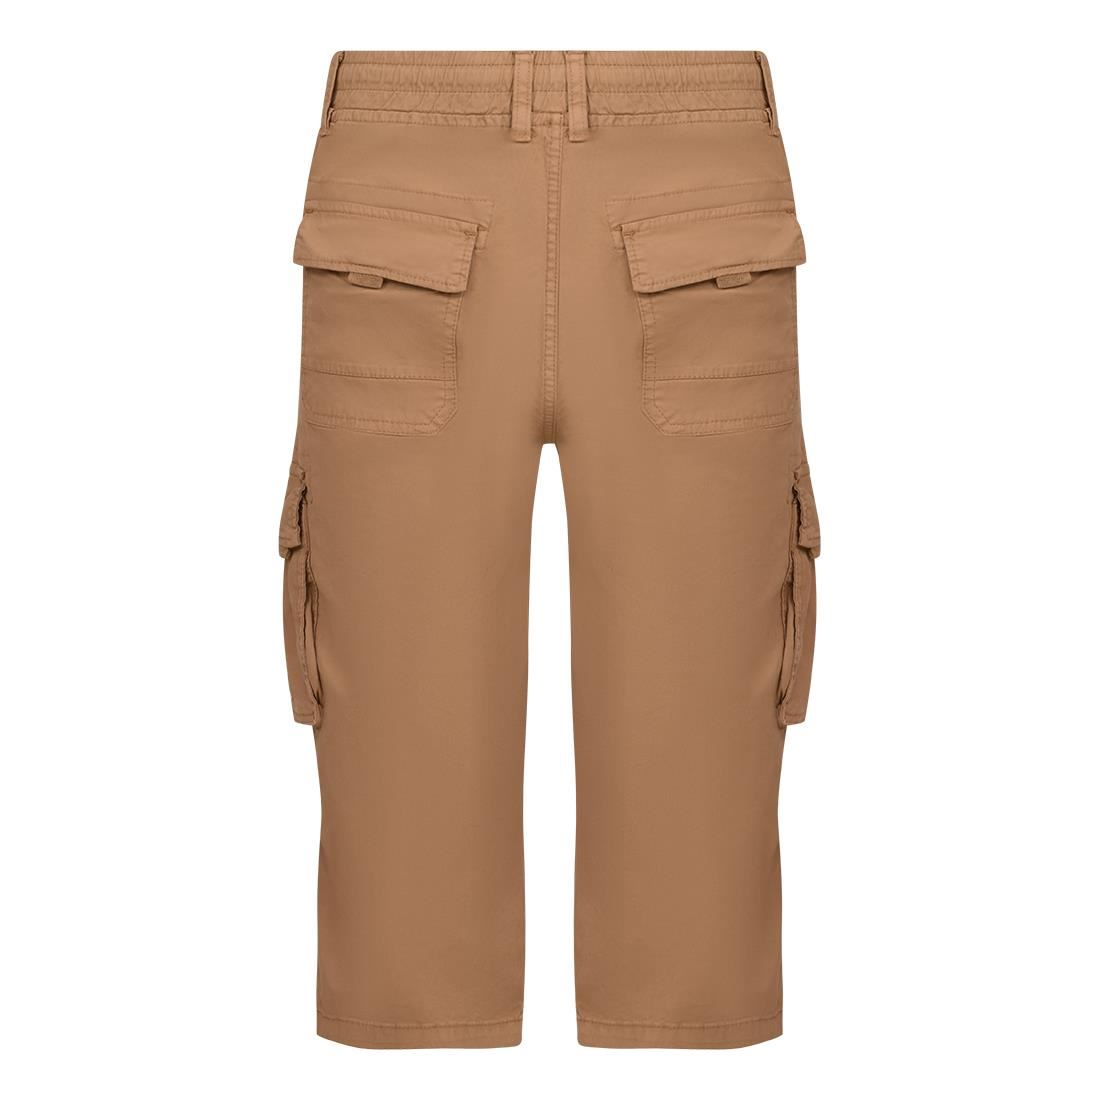 Mens High Quality 3/4 Long Summer Shorts Three Quarter Cargo Pockets Soft Cotton Pants Elasticated Waist Below the Knee Short